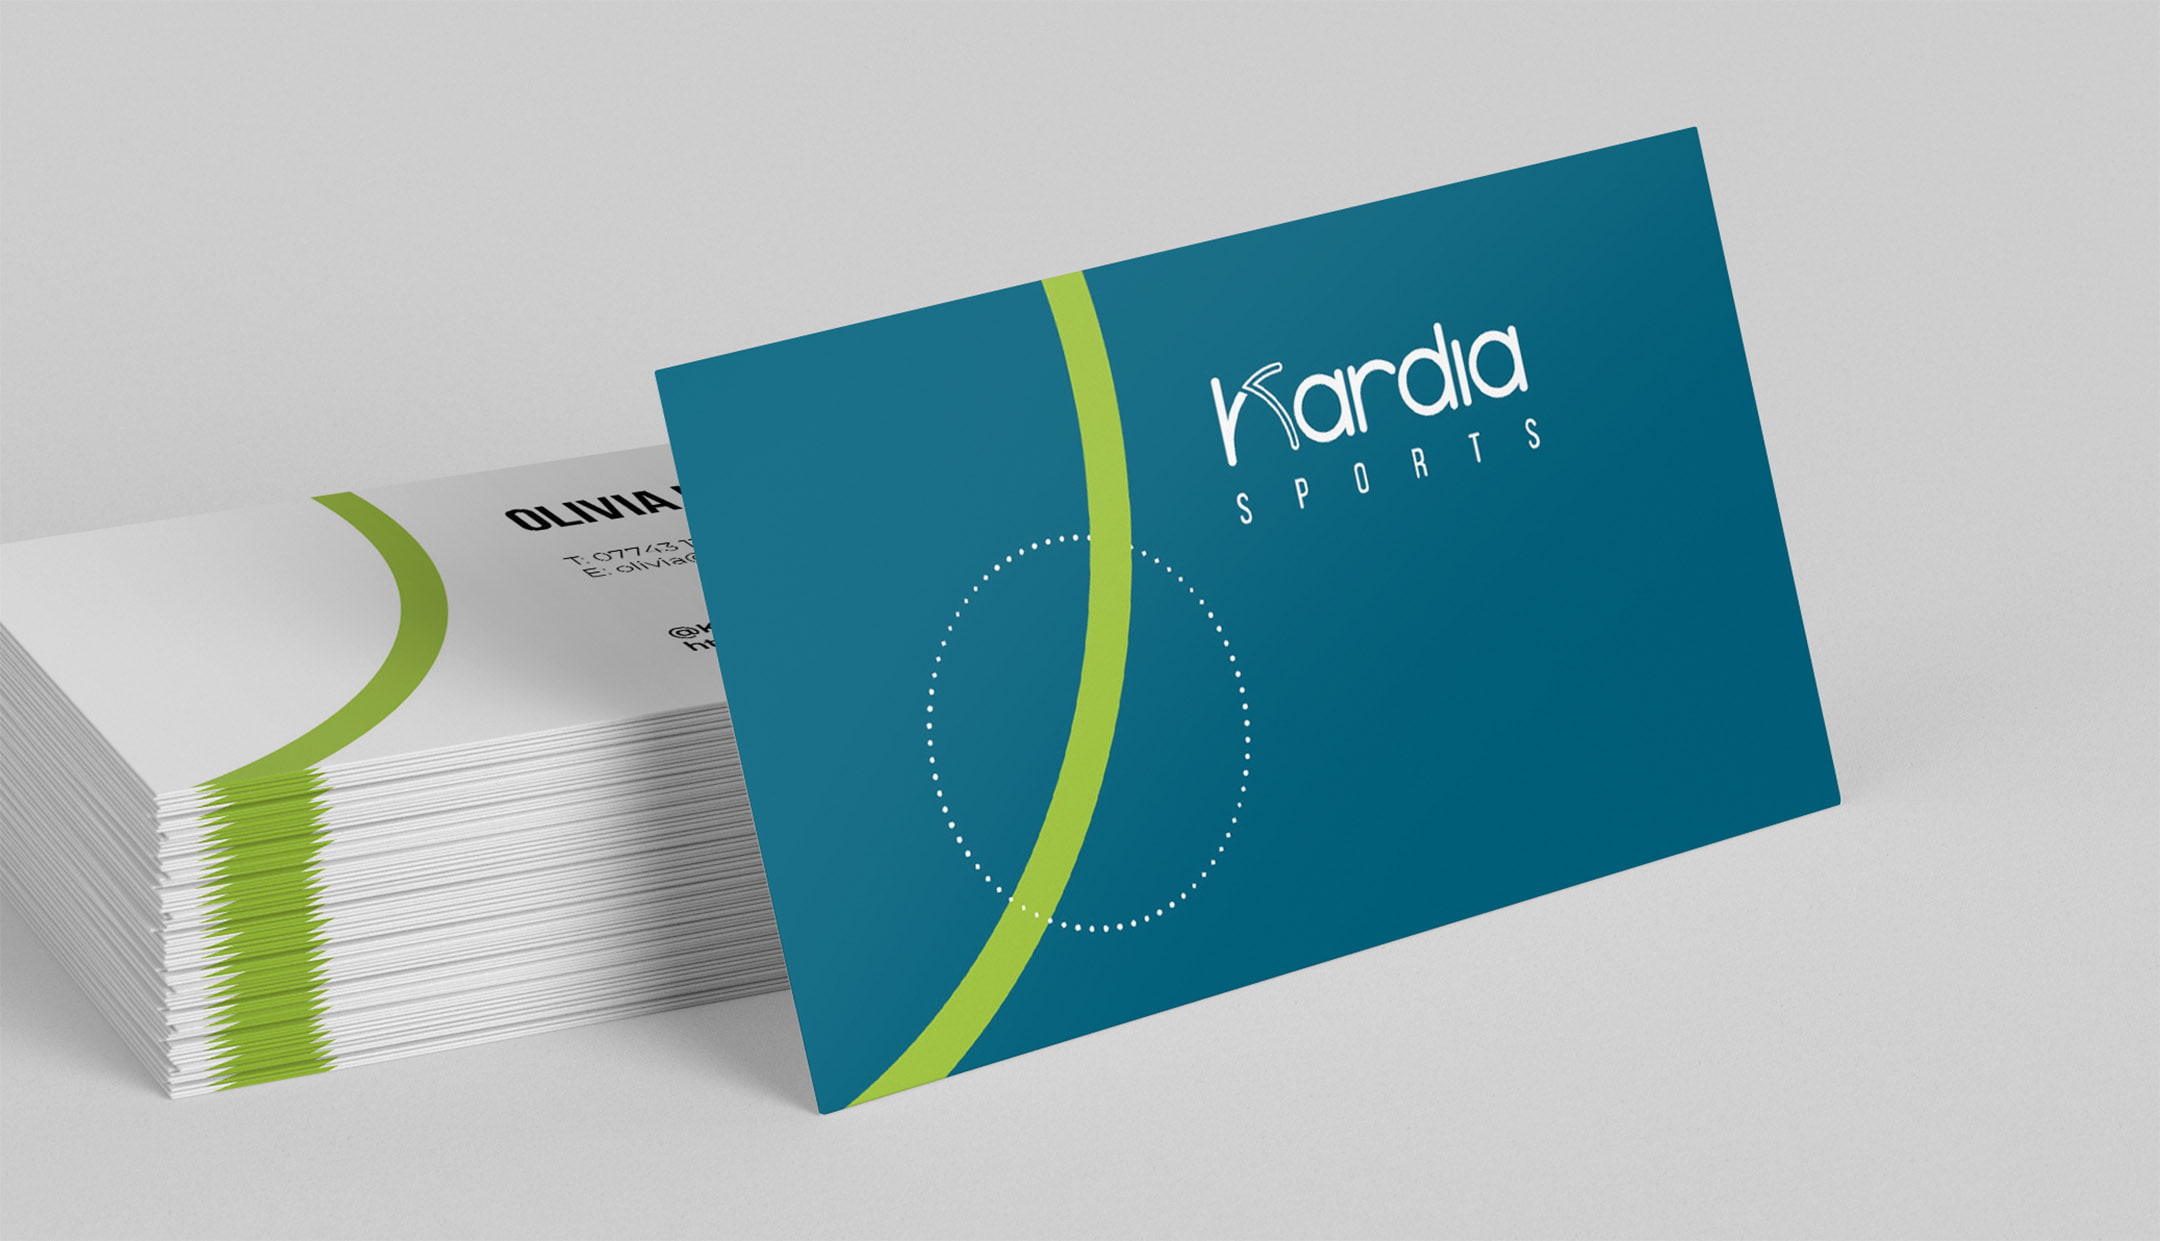 Kardia Sports business cards